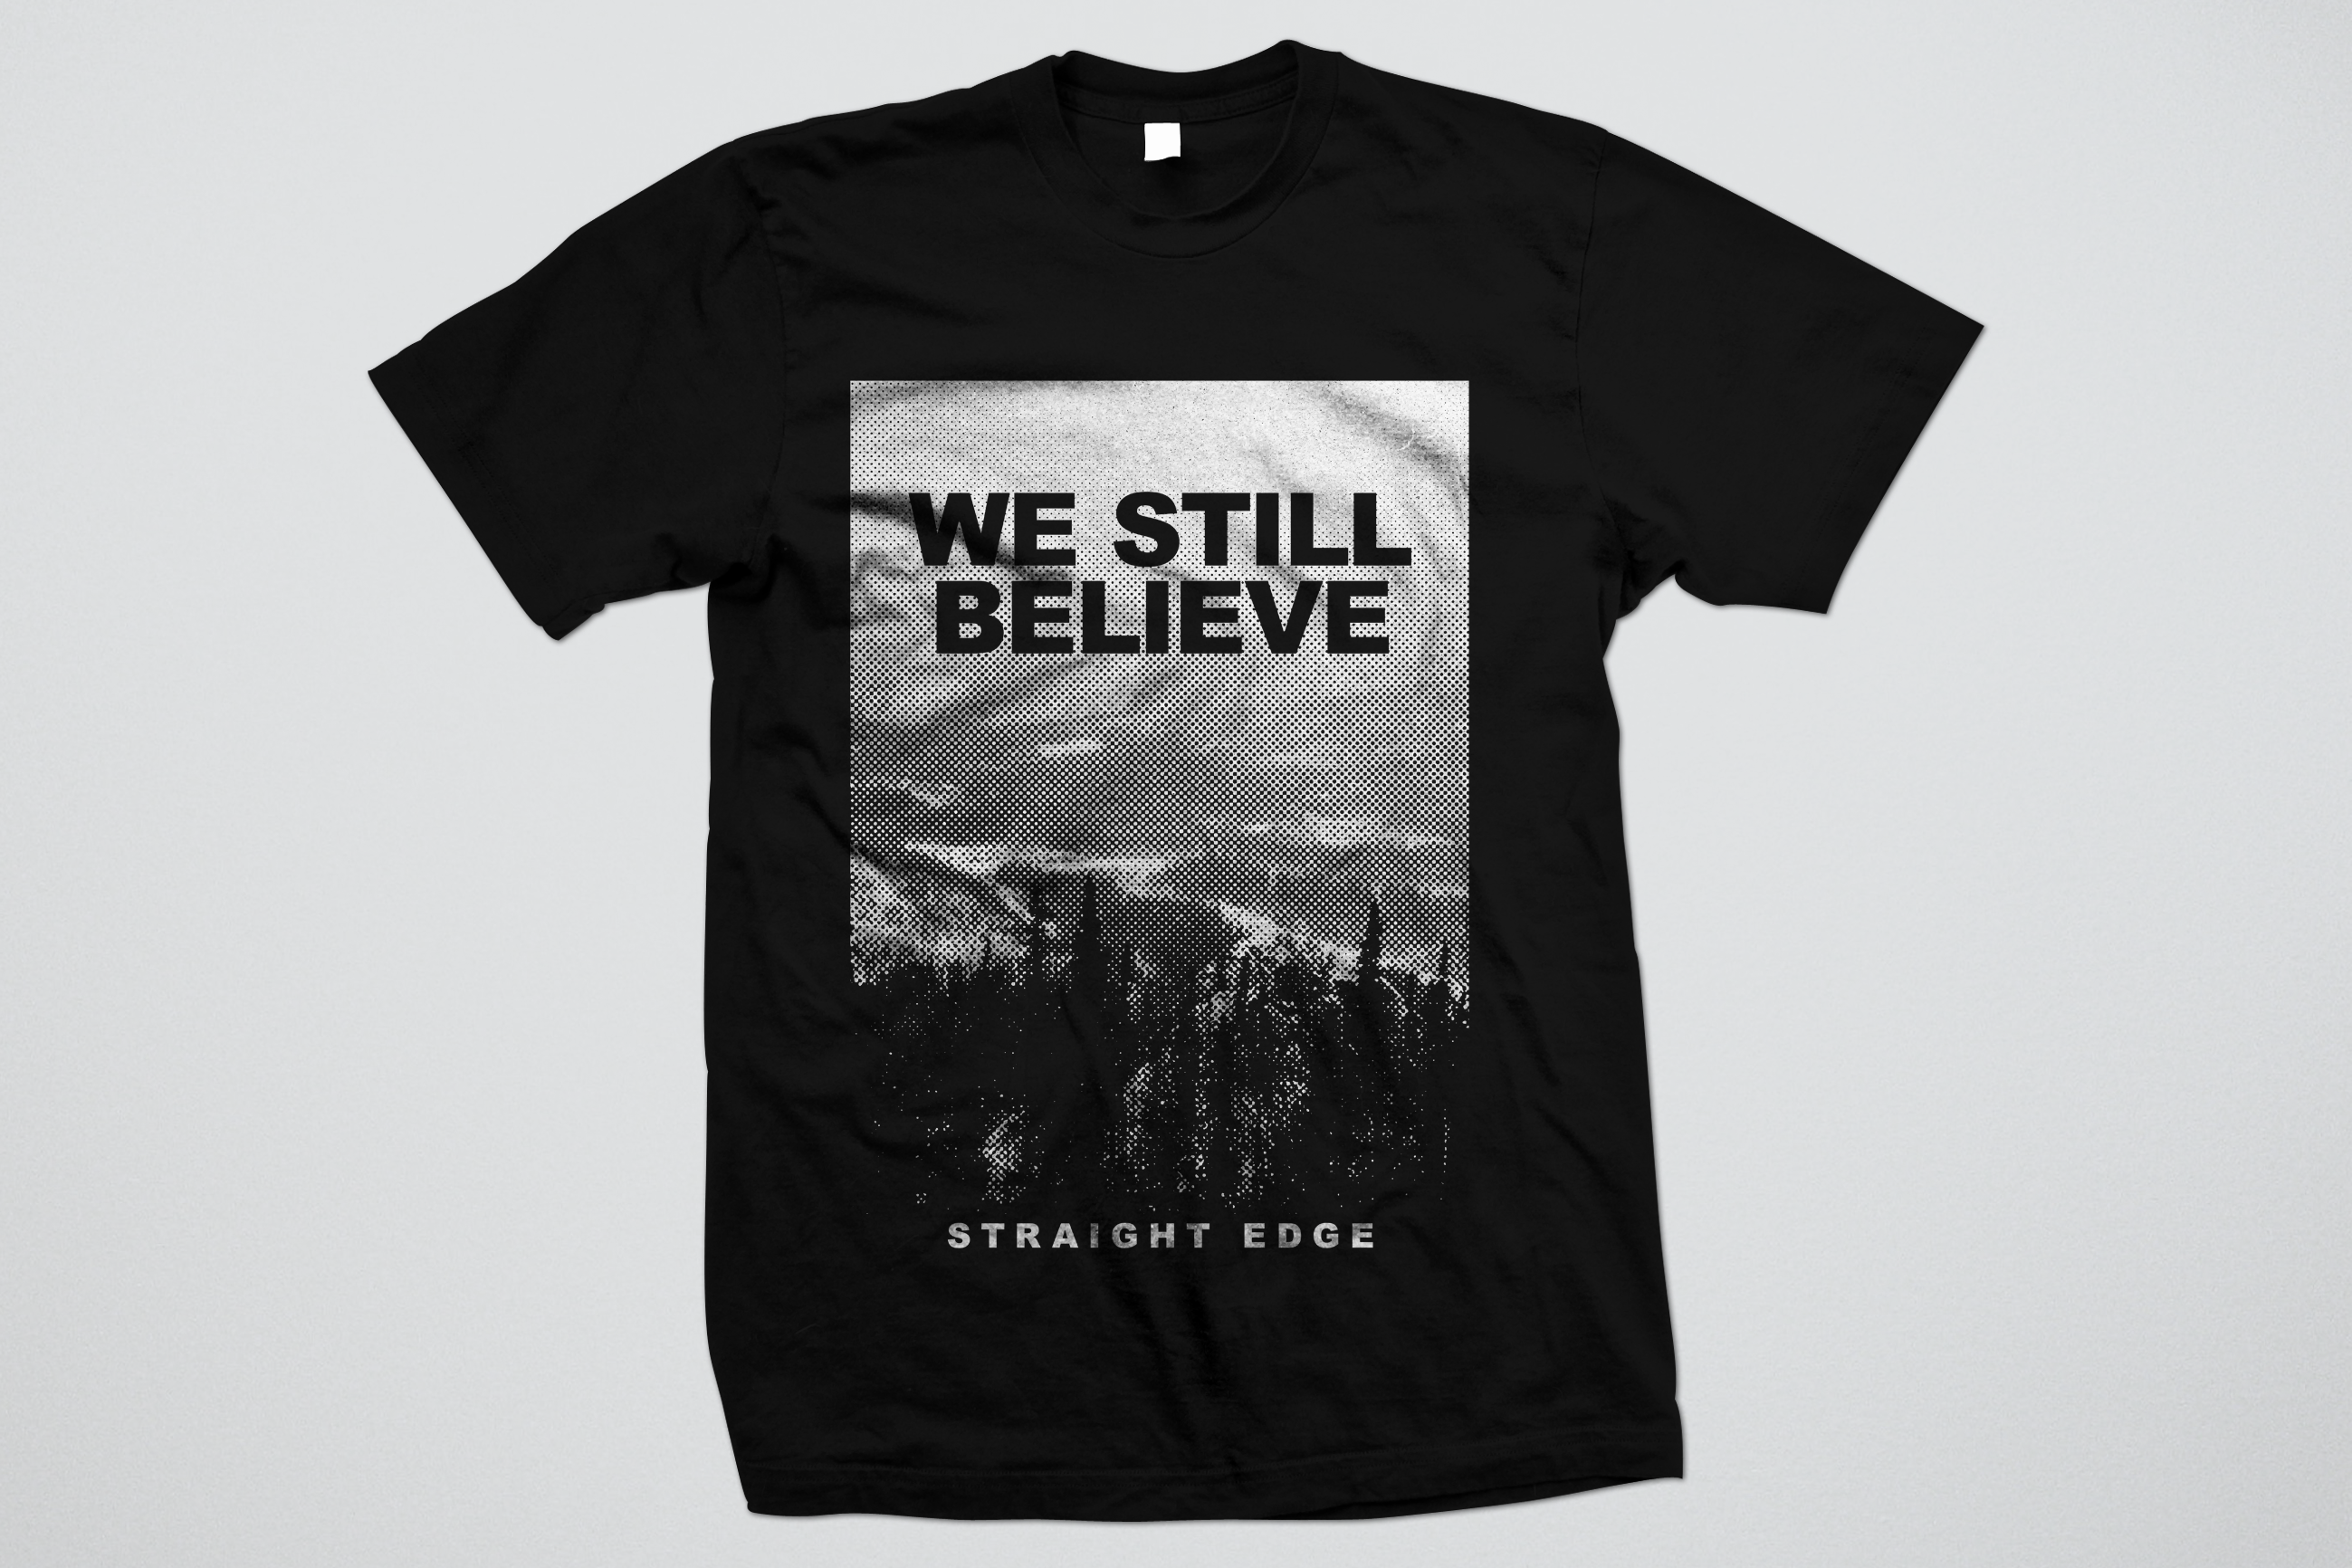 We Still Believe Straight Edge tee shirt in black by STRAIGHTEDGEWORLDWIDE